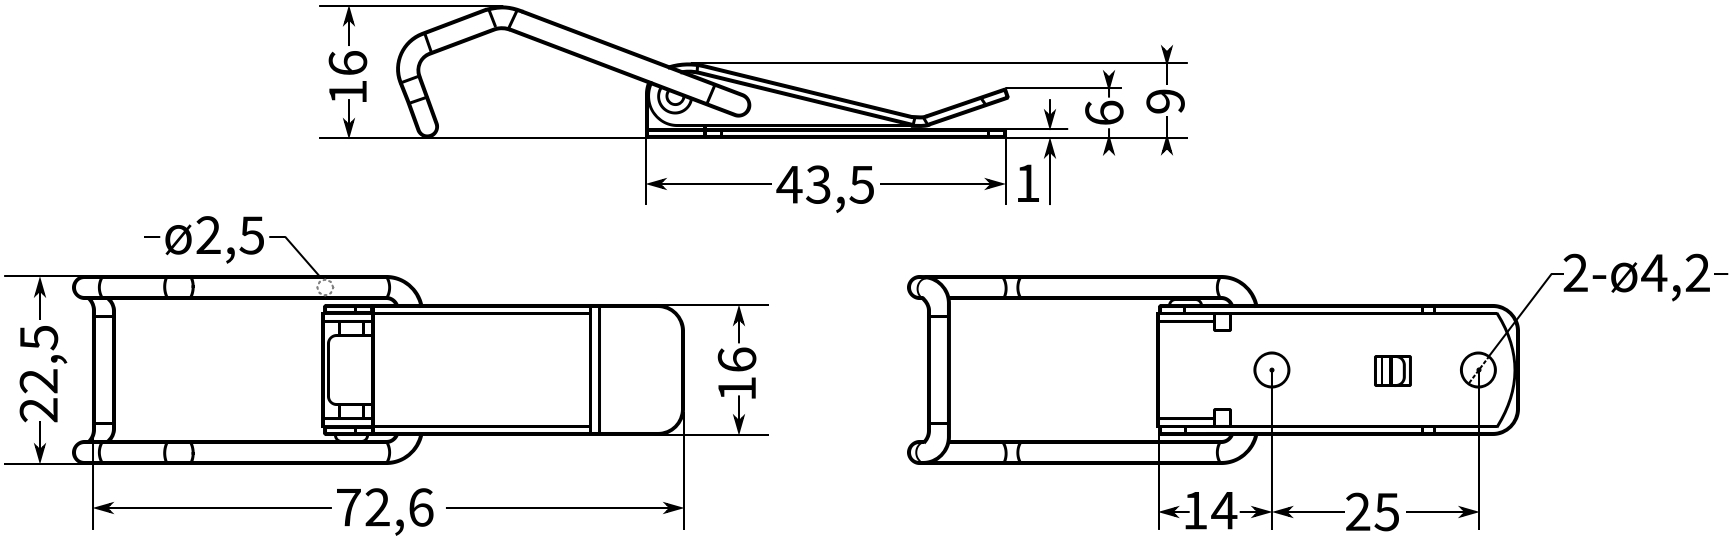 Защелка натяжная L=73 B23, схема и размеры